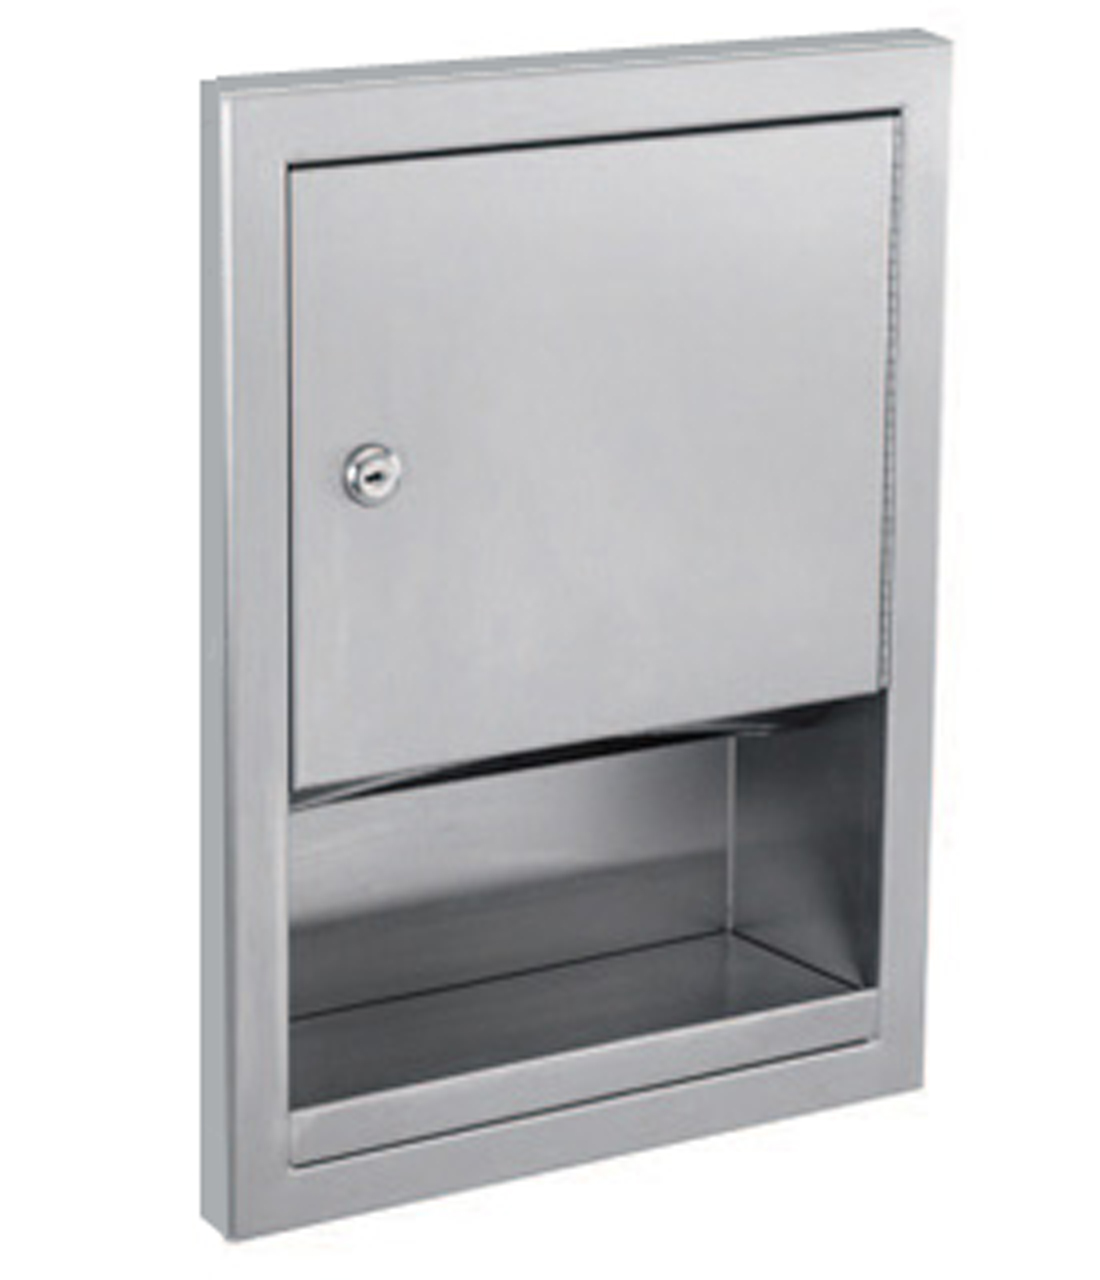 Semi-Recessed Towel Dispenser - (Model #: td-4f) Image